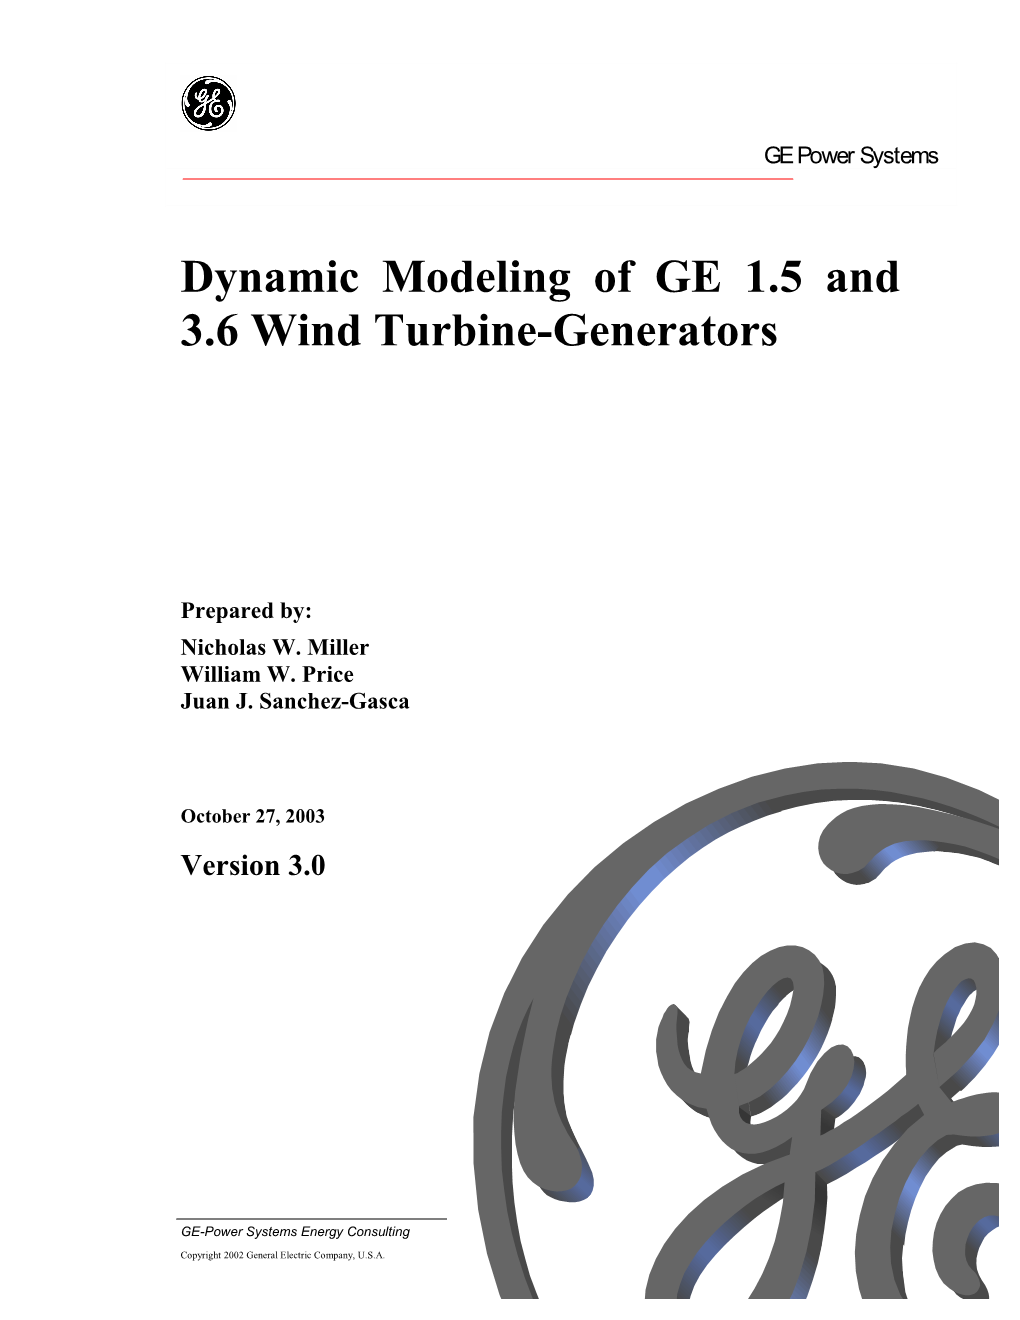 Dynamic Modeling of GE 1.5 and 3.6 Wind Turbine-Generators